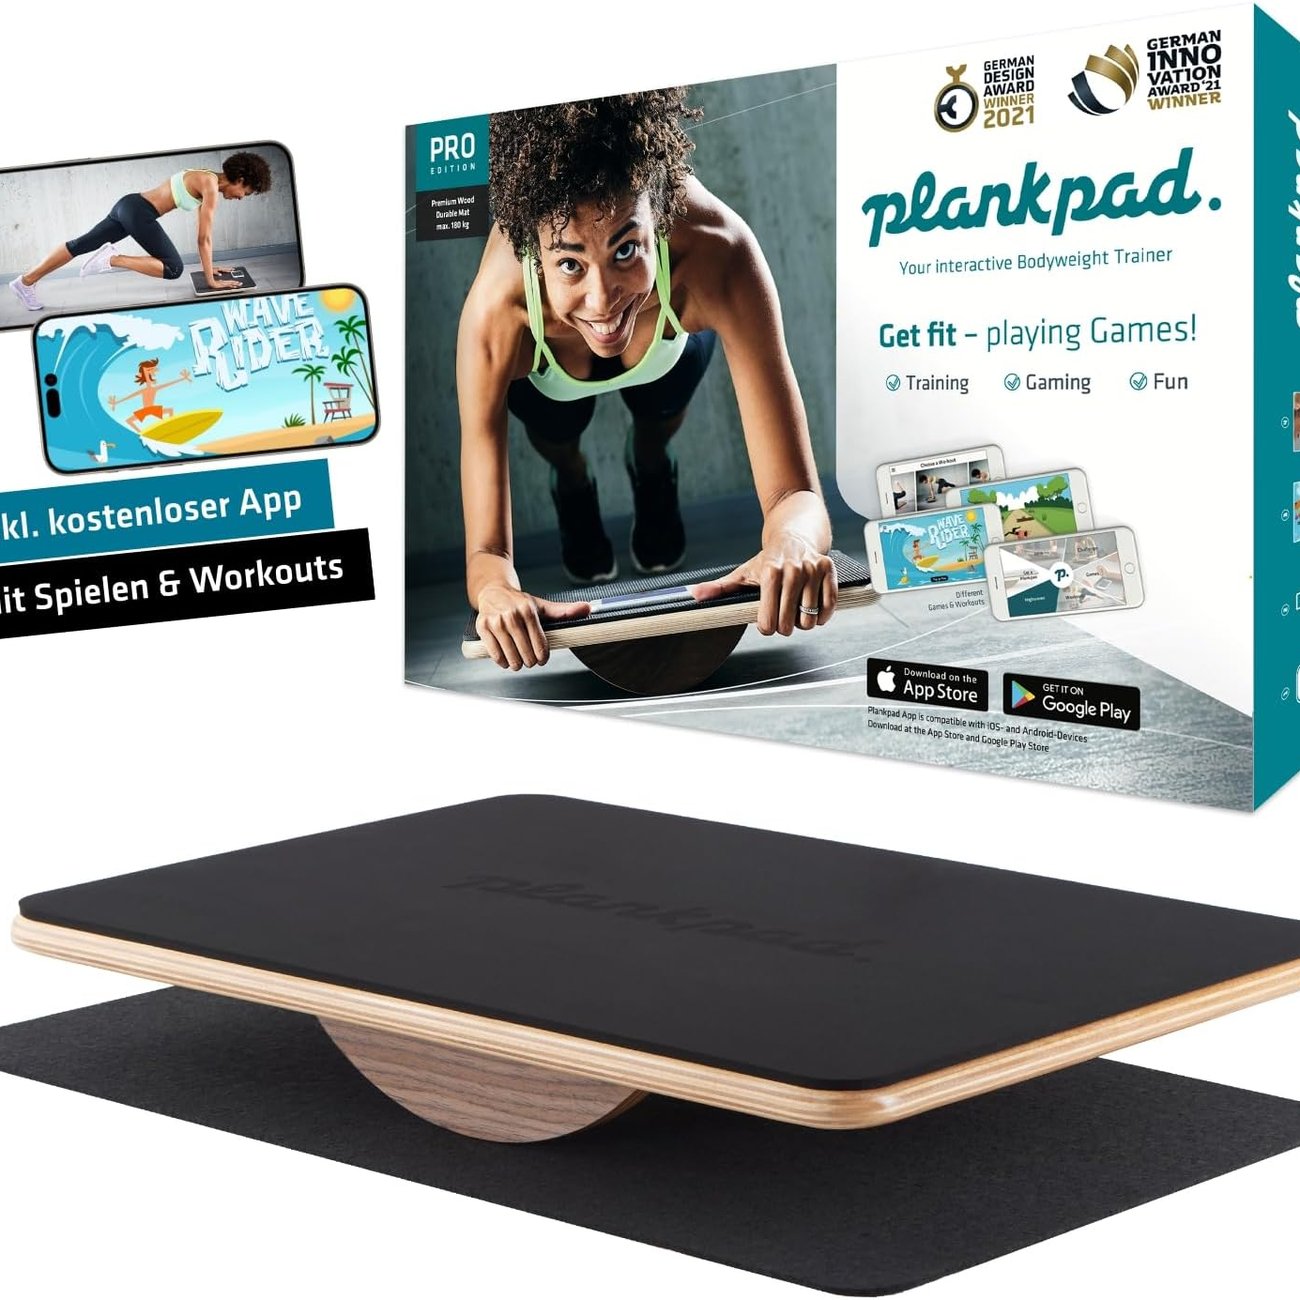 Plankpad PRO - Plank & Balance Board